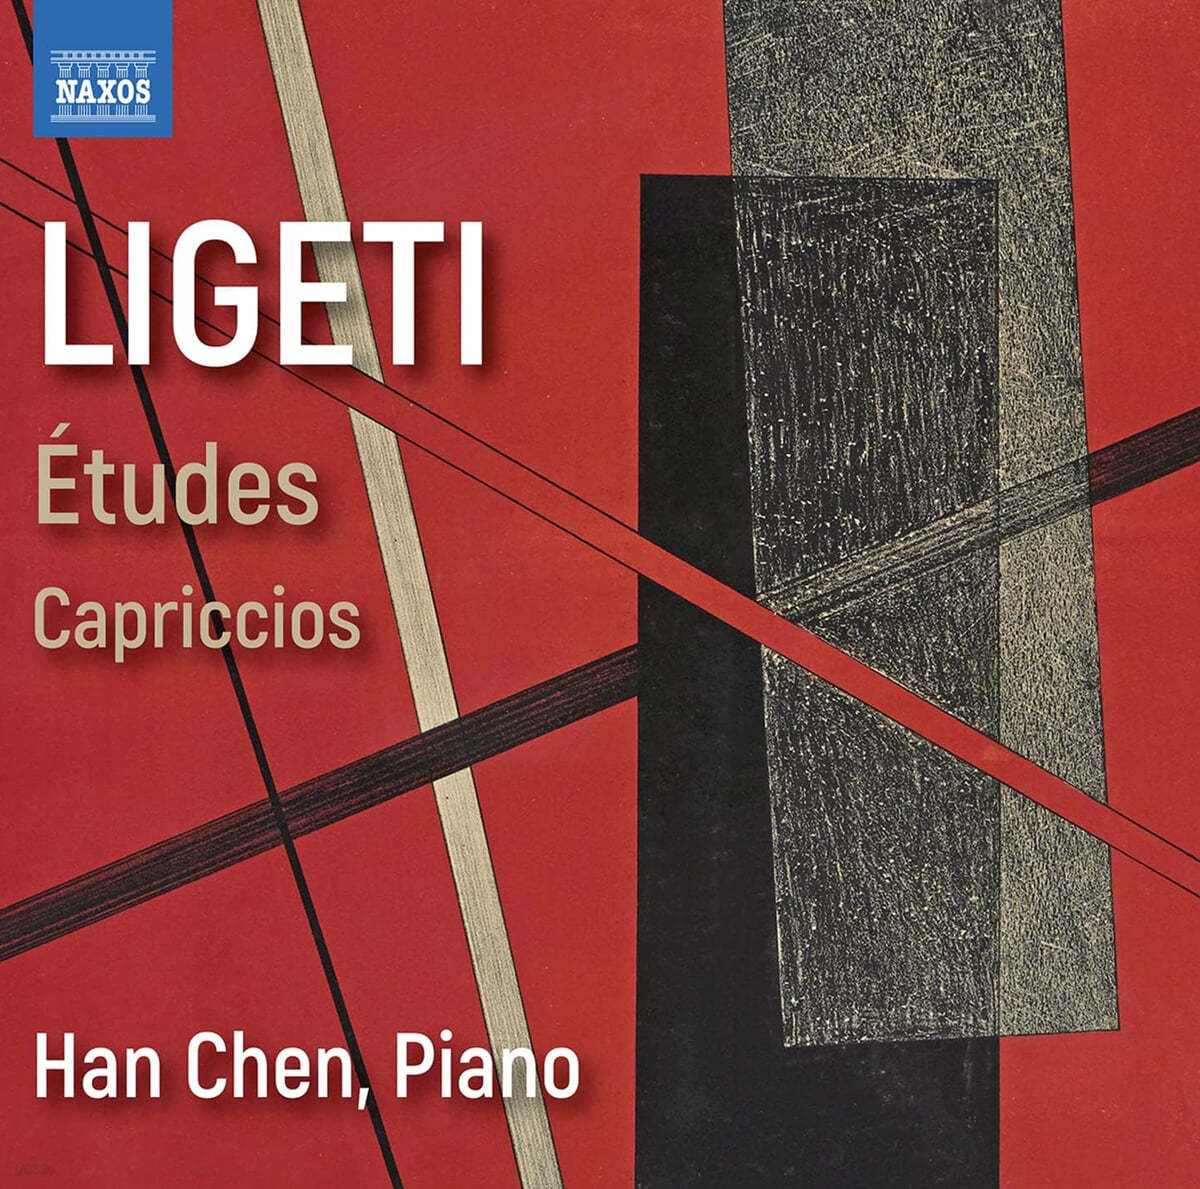 Han Chen 죄르지 리게티: 피아노 연습곡, 카프리치오소 (Gyorgy Ligeti: Complete Piano Etudes)